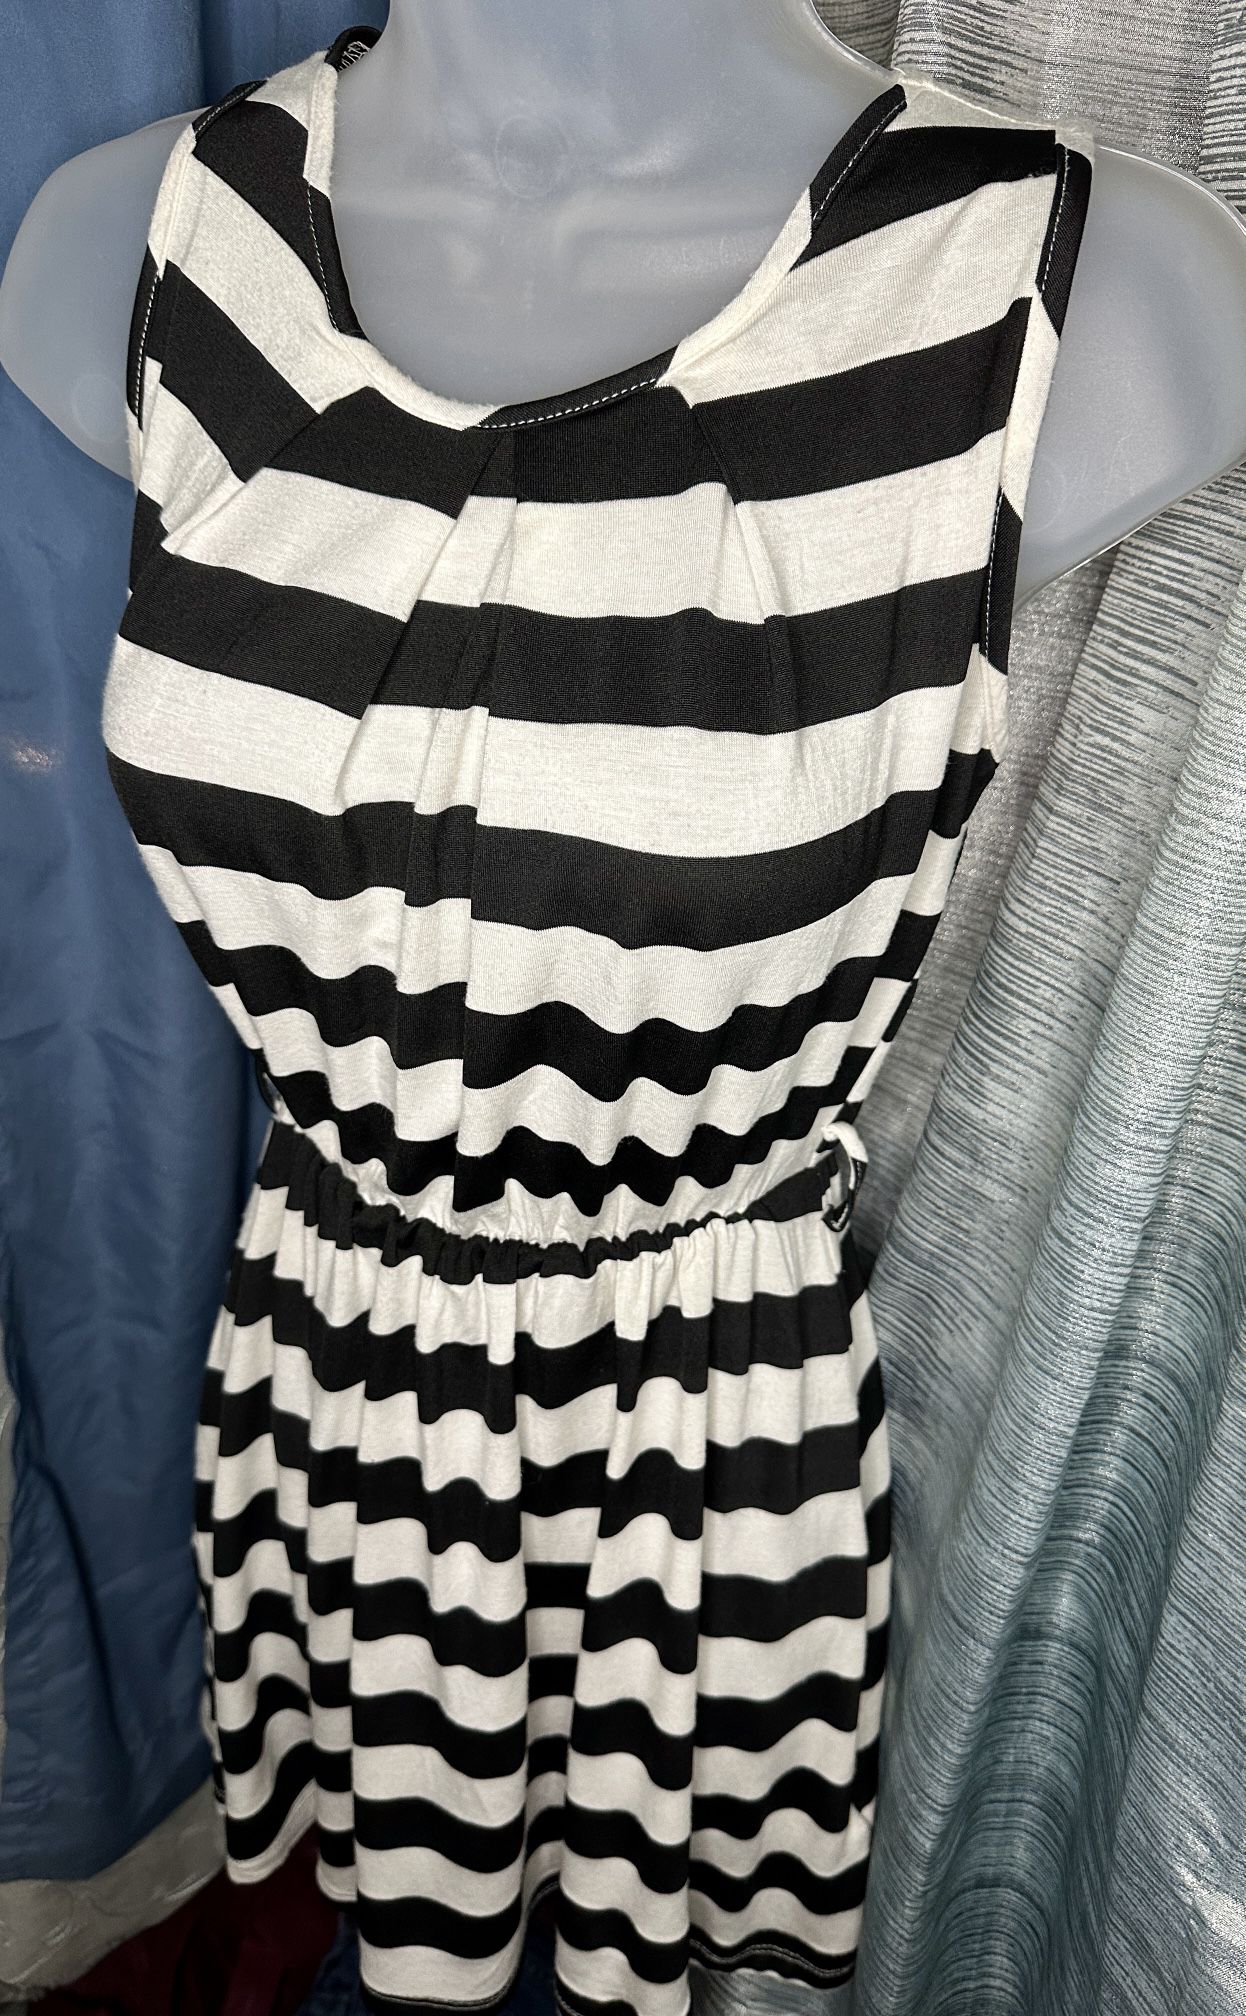 Juniors Summer Dress - Black, White Striped Sundress - Women’s X-Small (0-3)